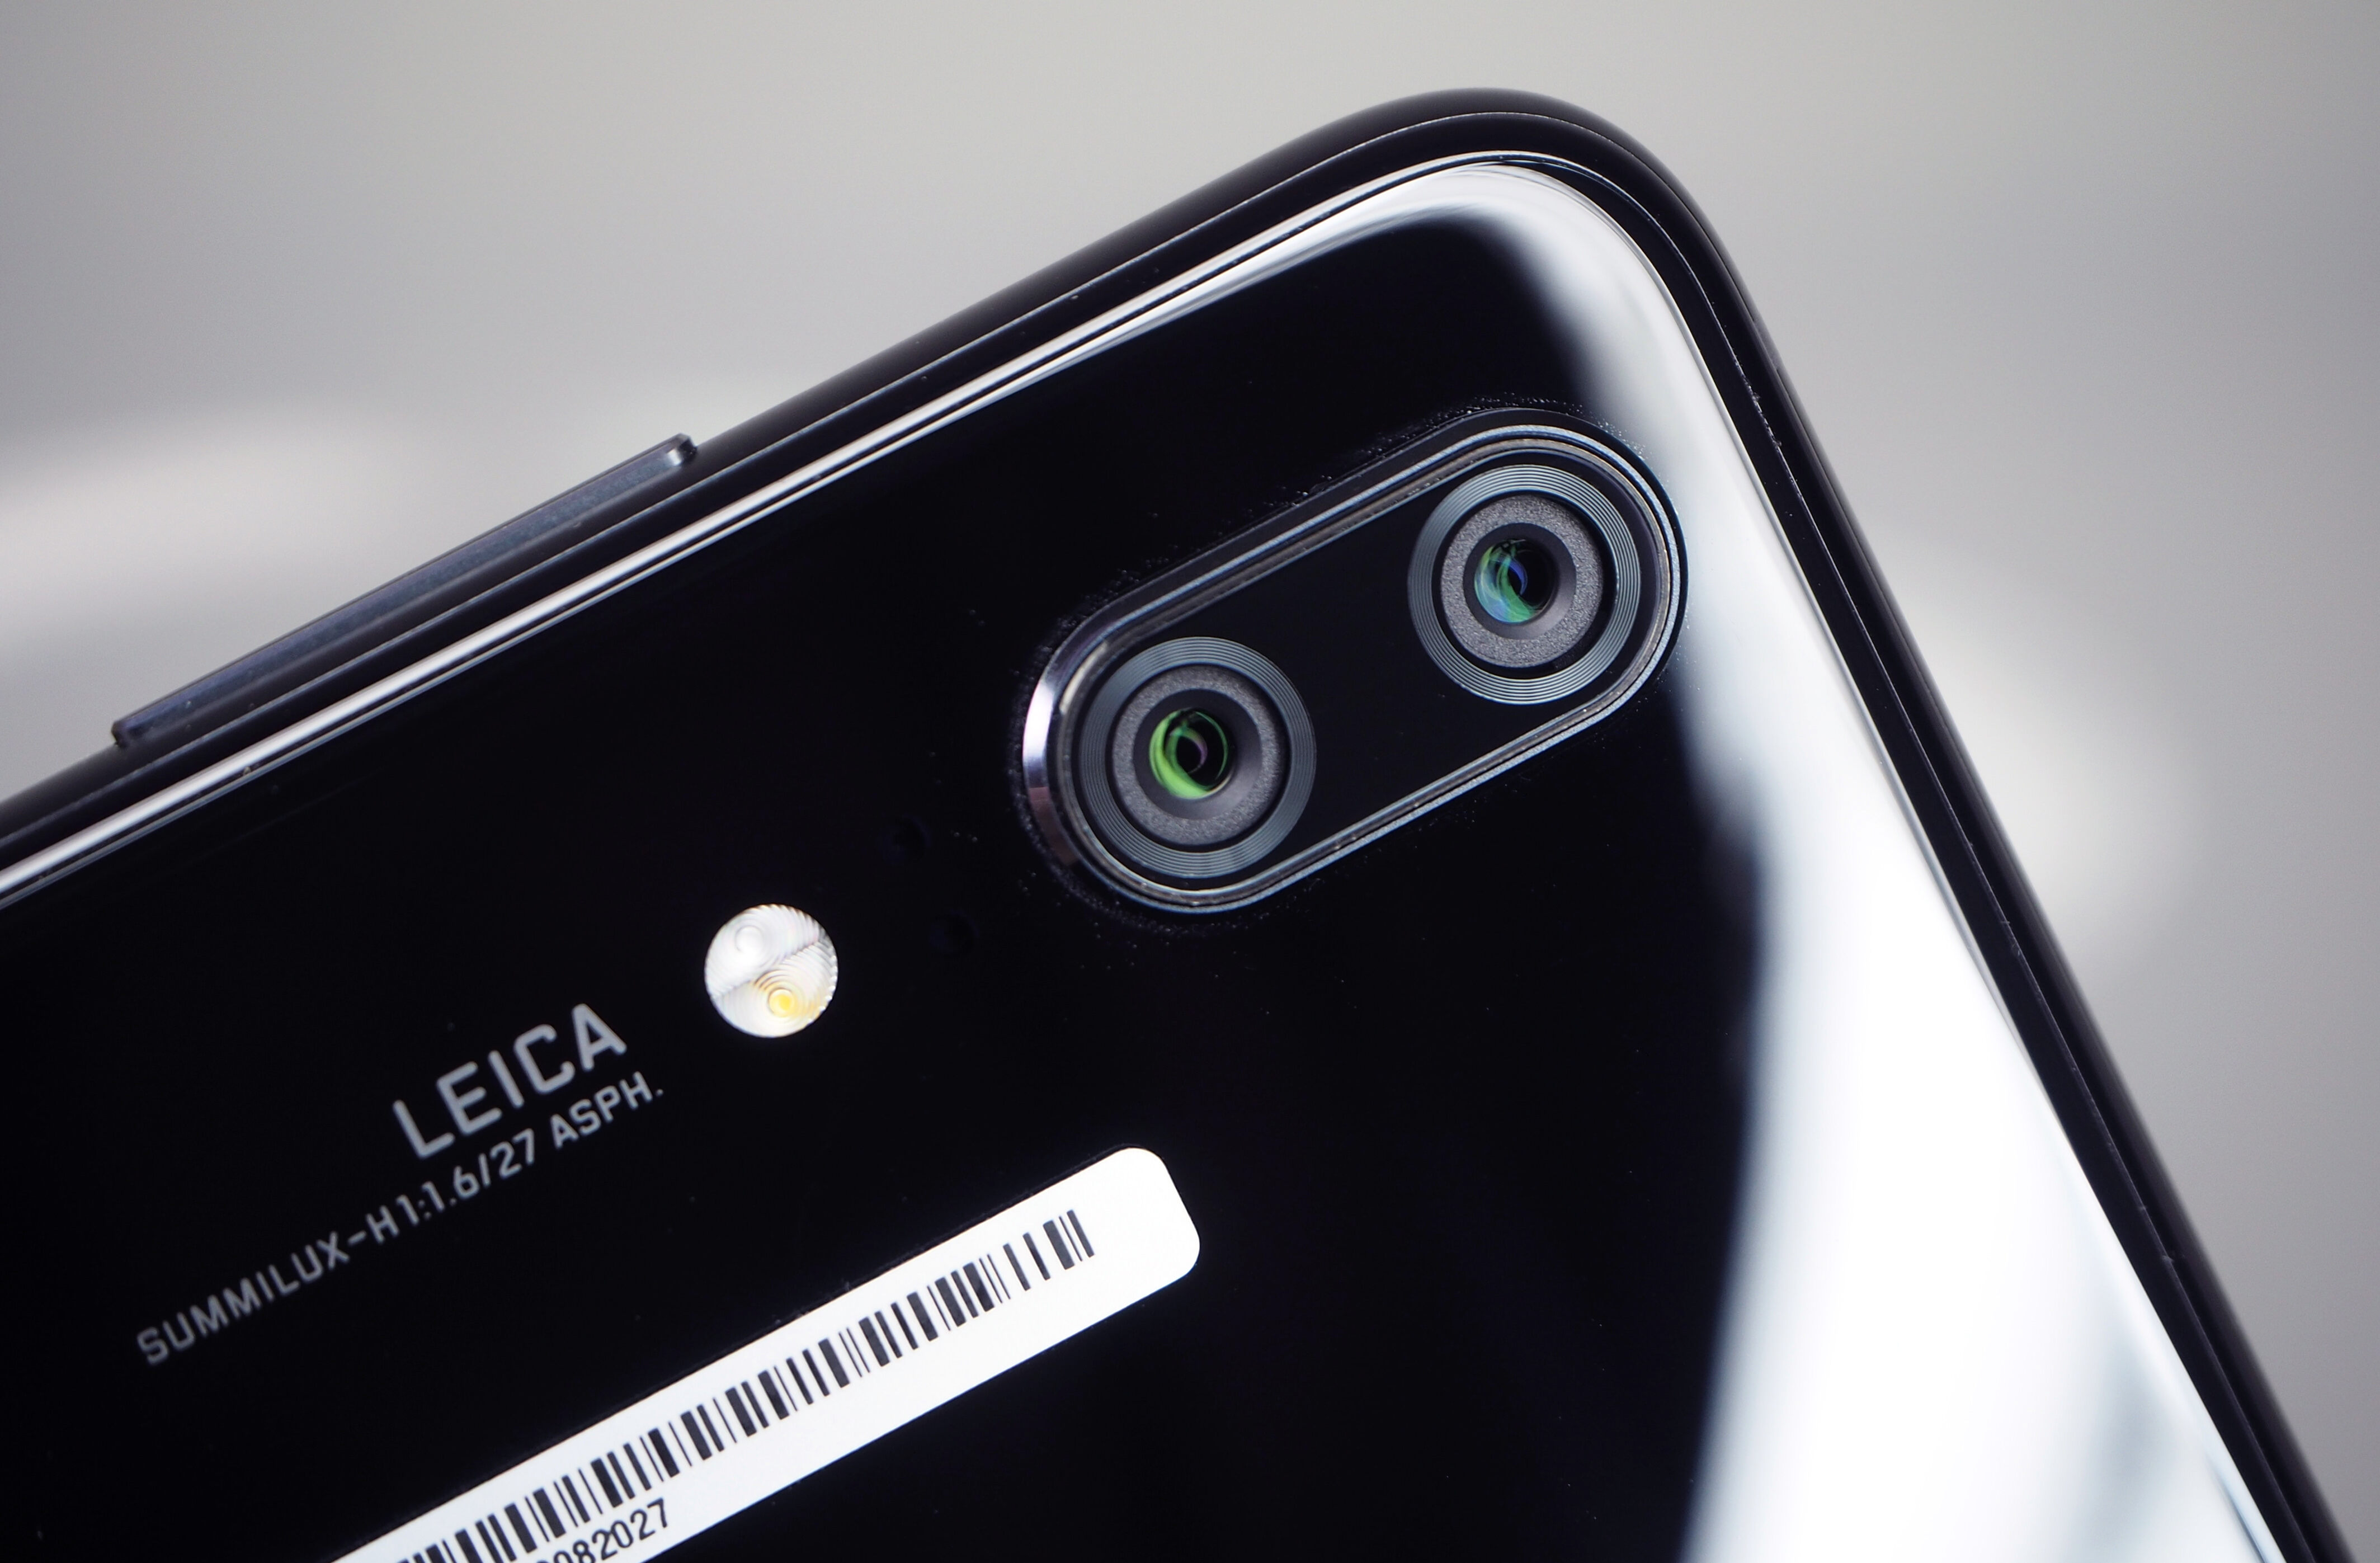 Huawei P20 Leica Smartphone Review